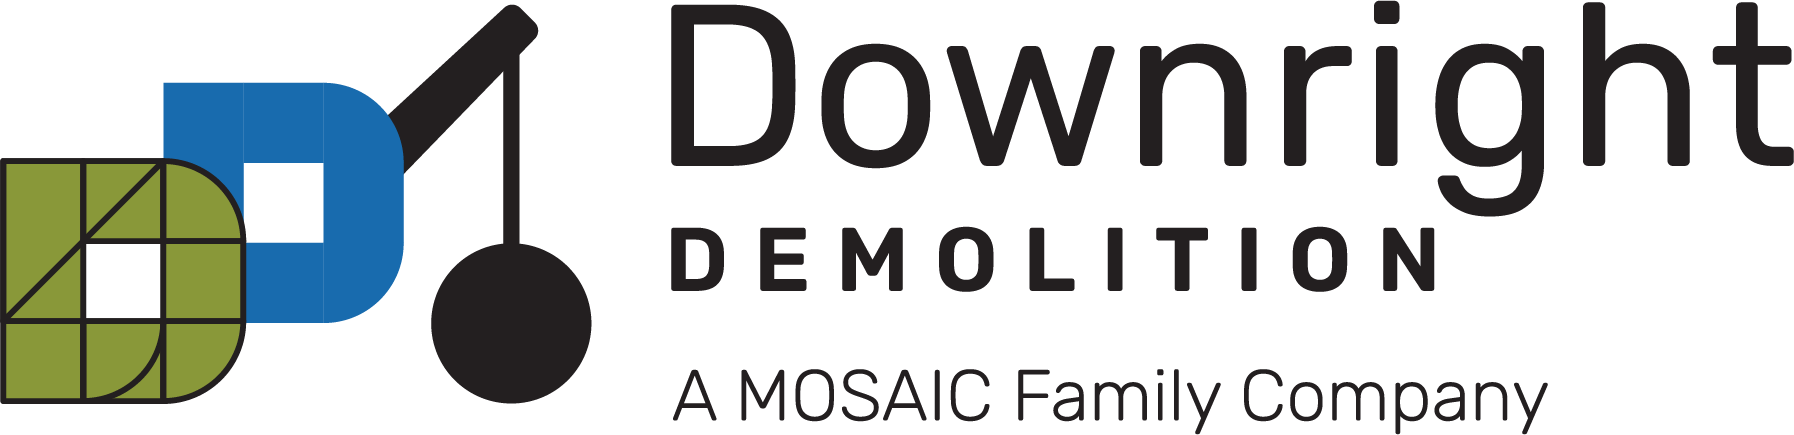 Downright Demolition Limited